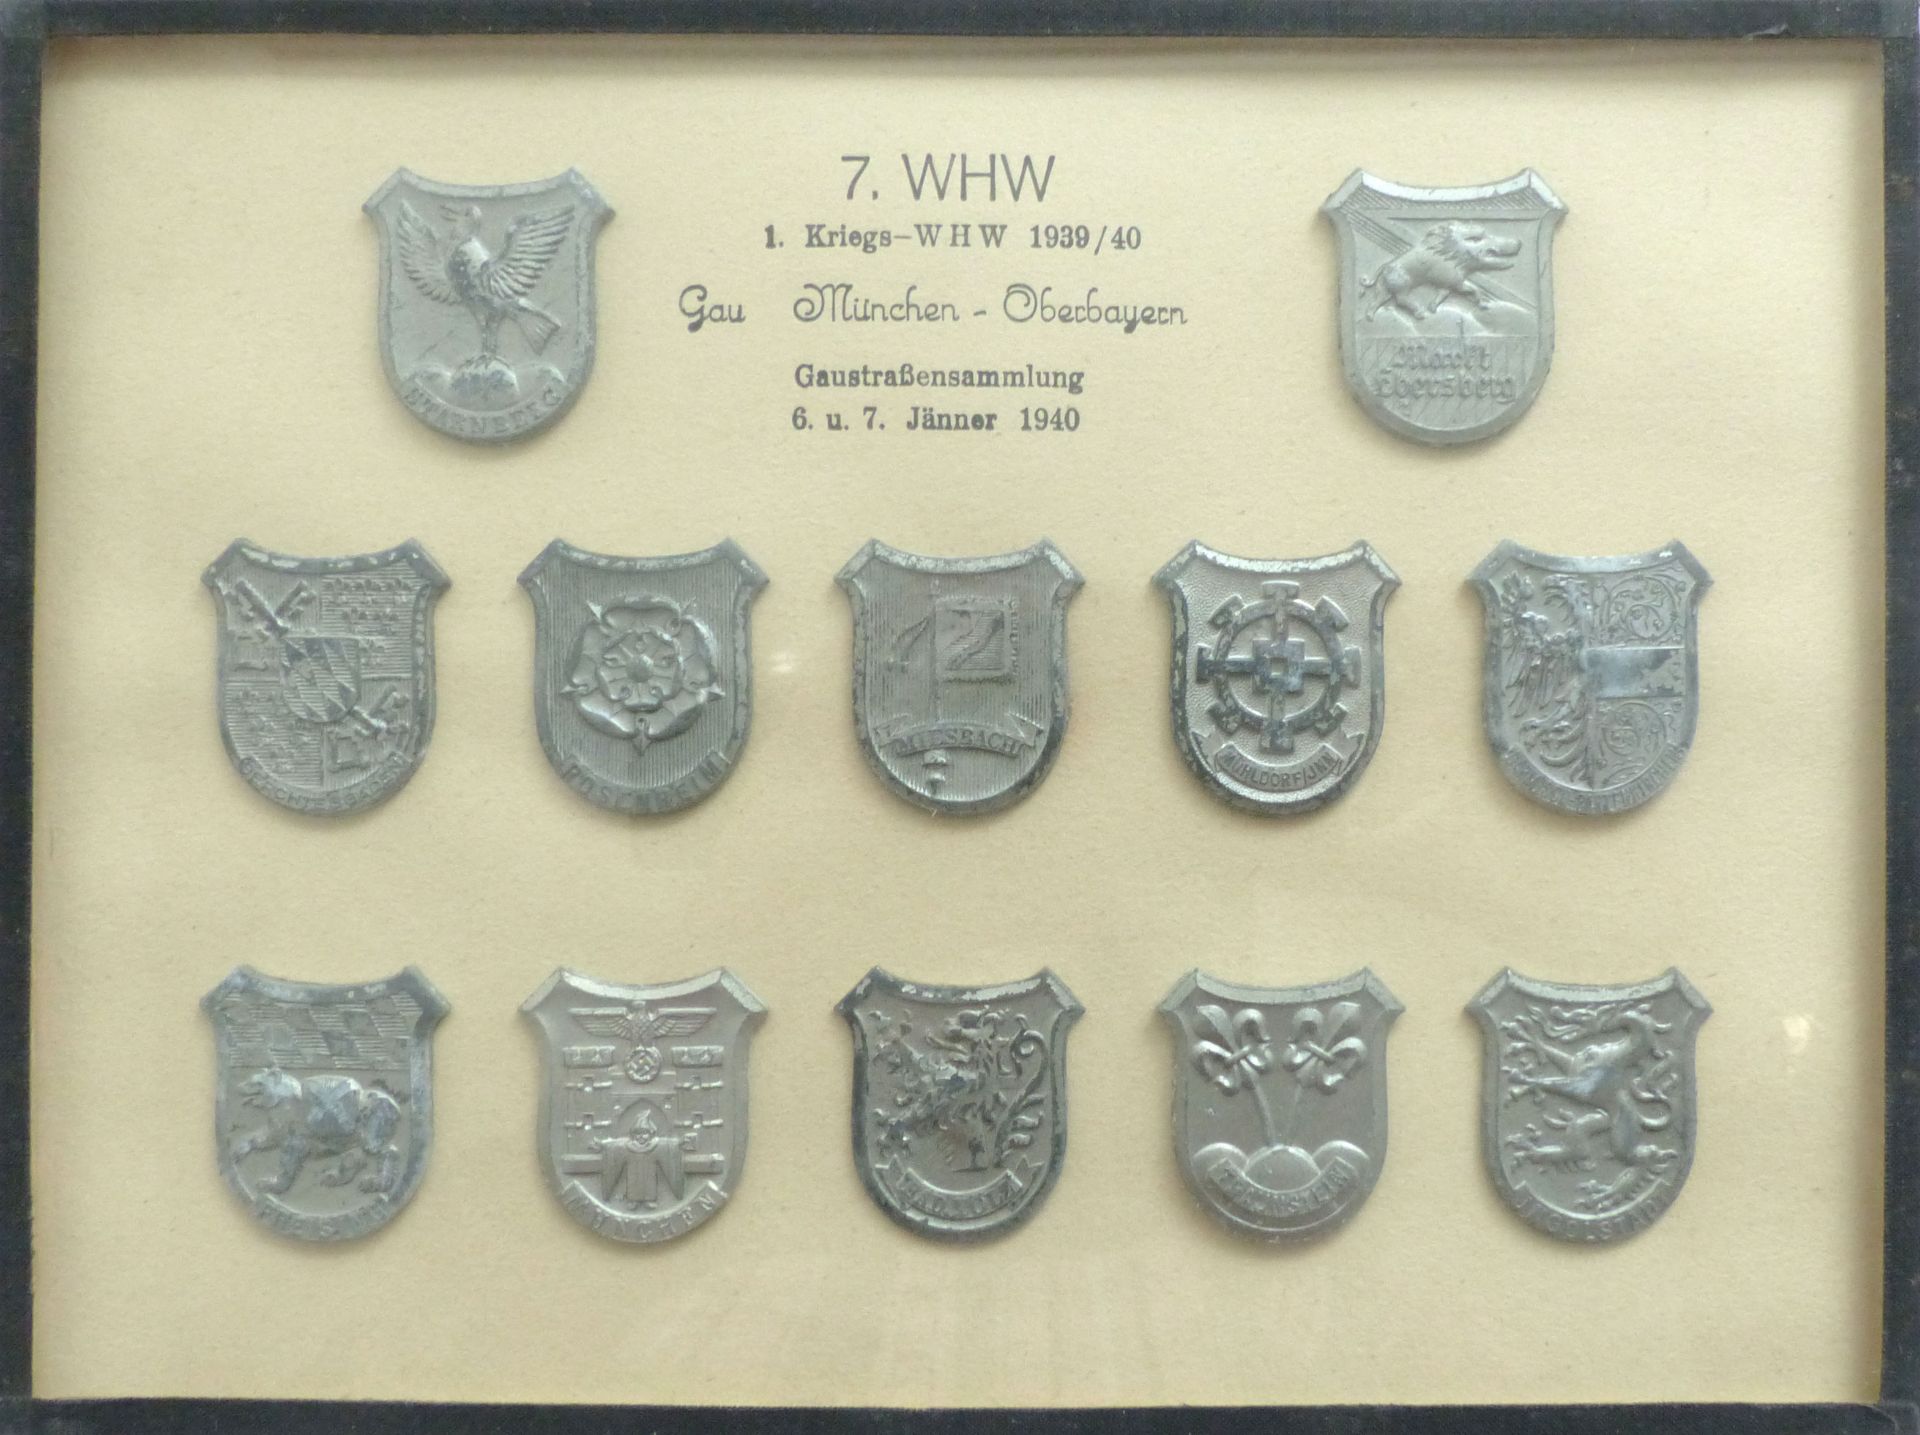 WHW Gau München-Oberbayern Gaustraßensammlung Januar 19340 12 Abzeichen im Rahmen 17,5 x24 cm I-II